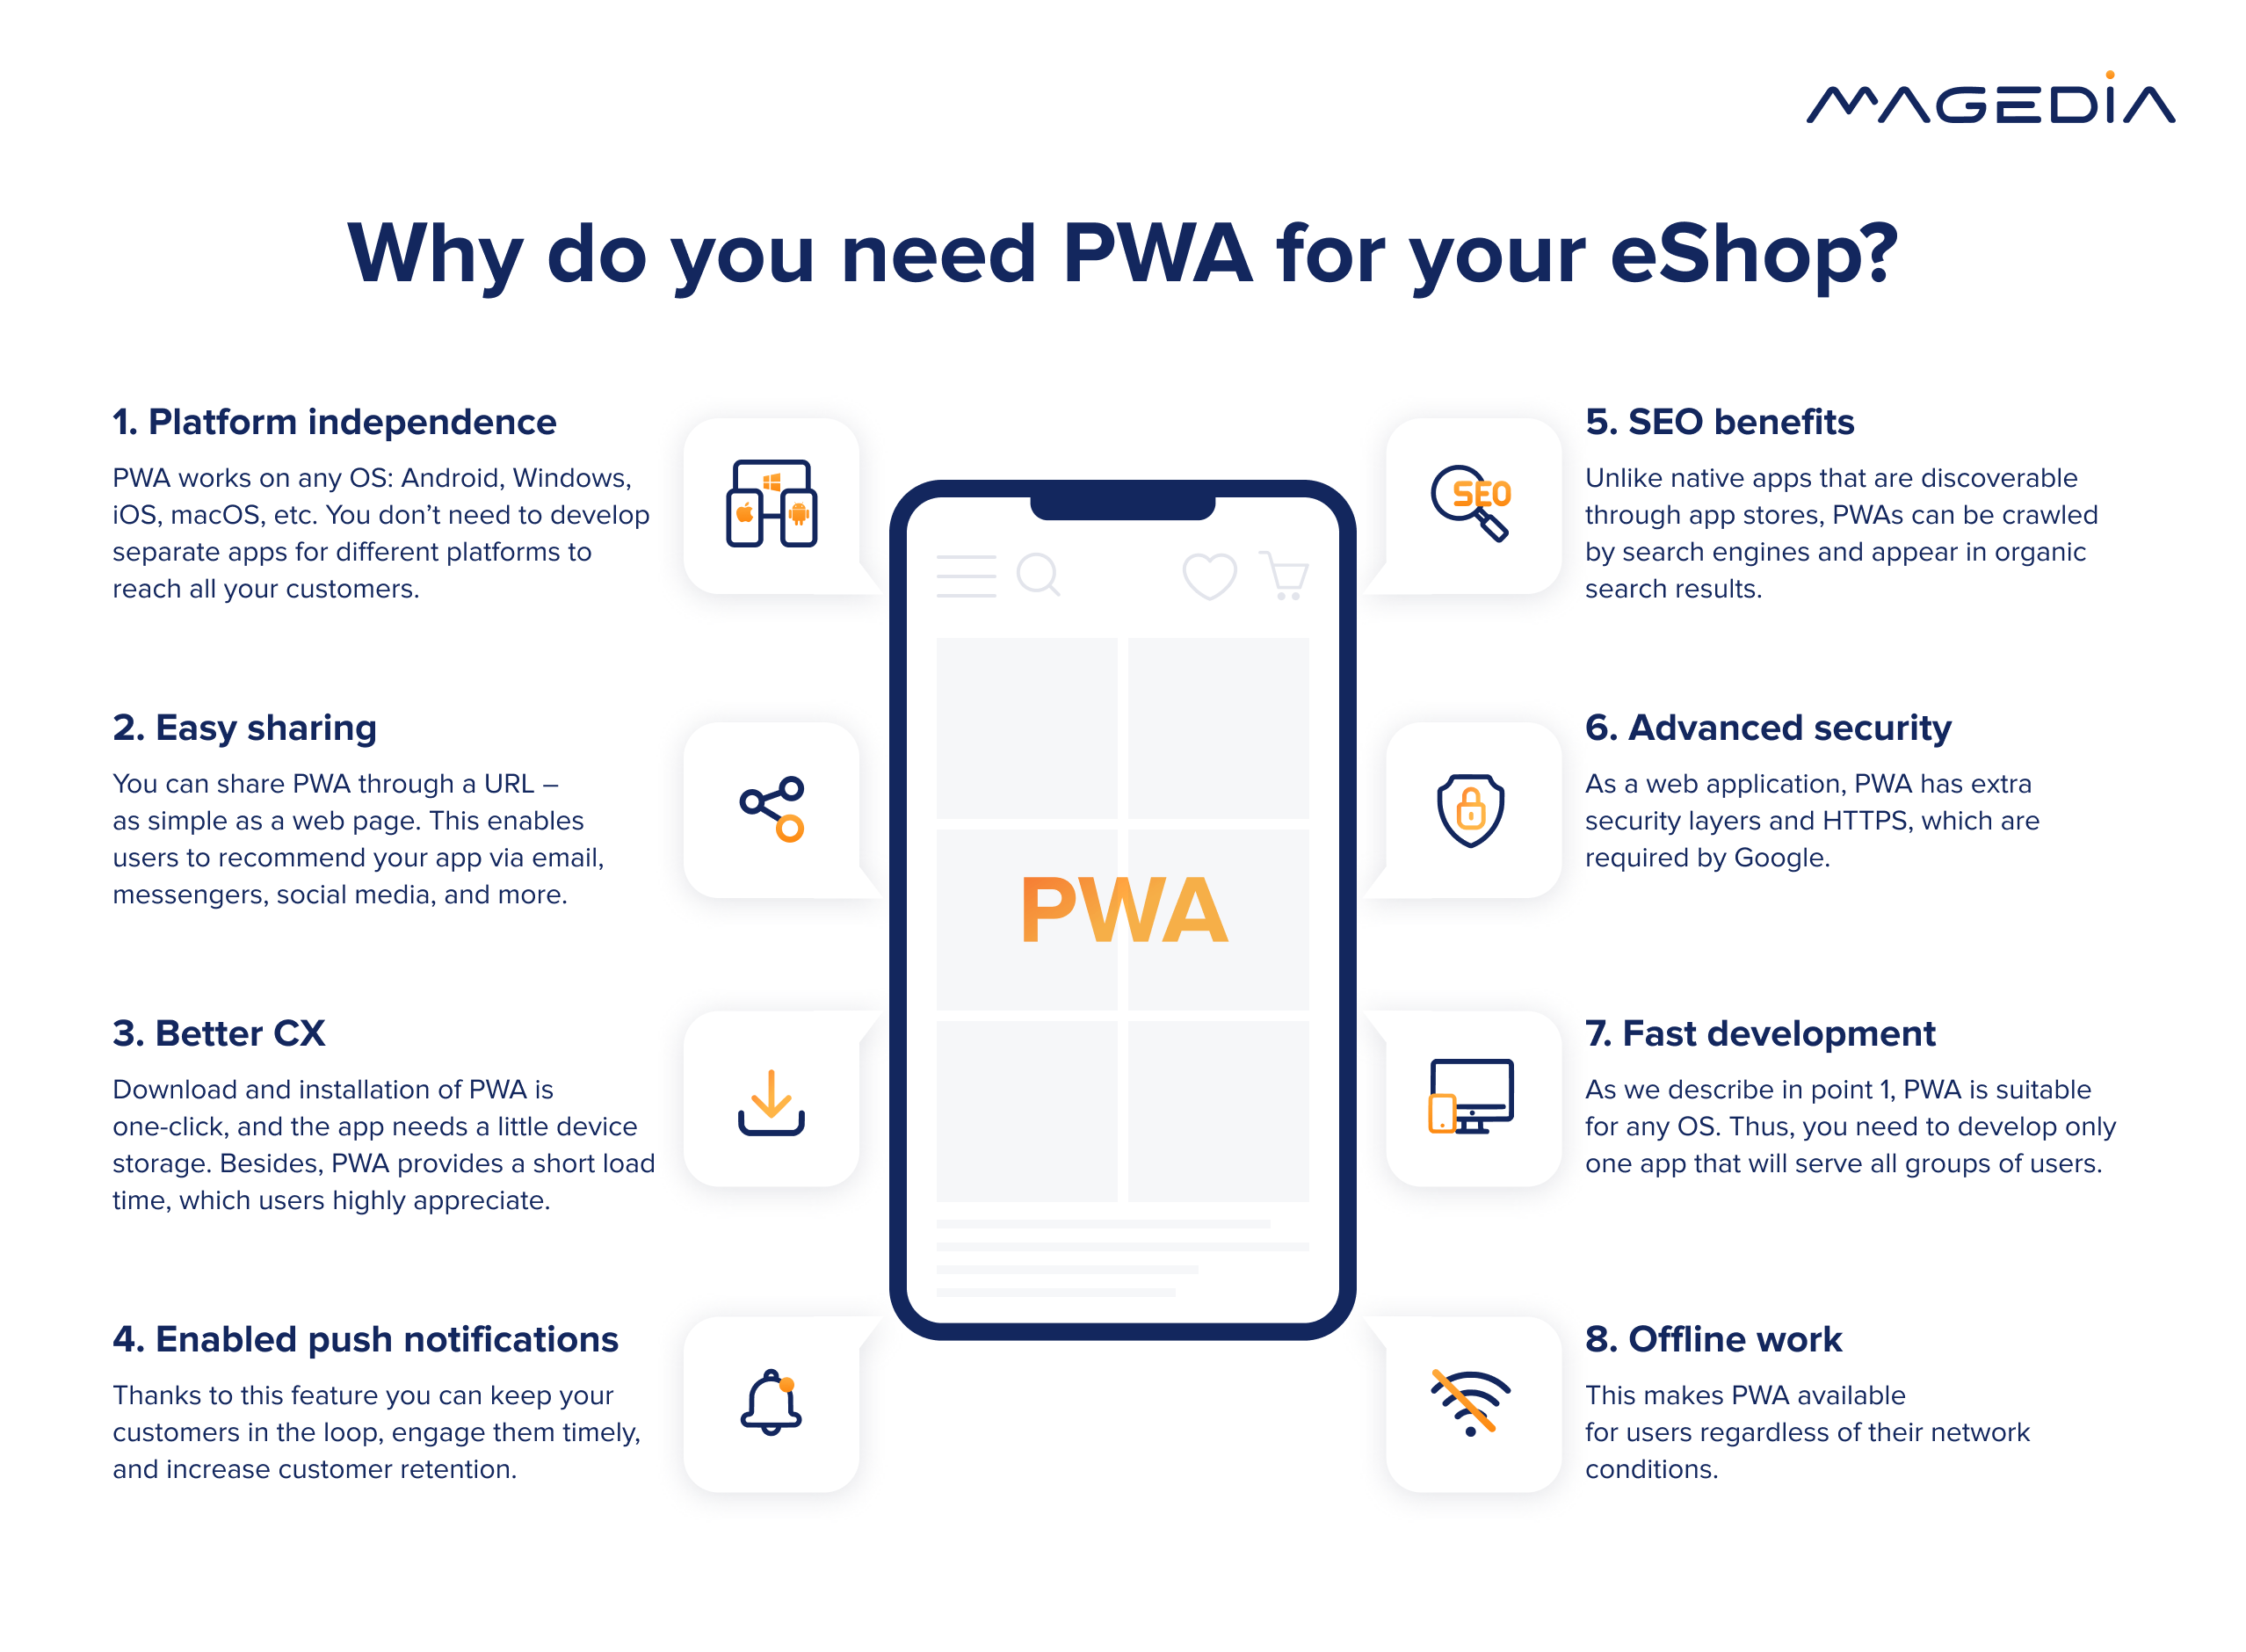 PWA benefits for eCommerce